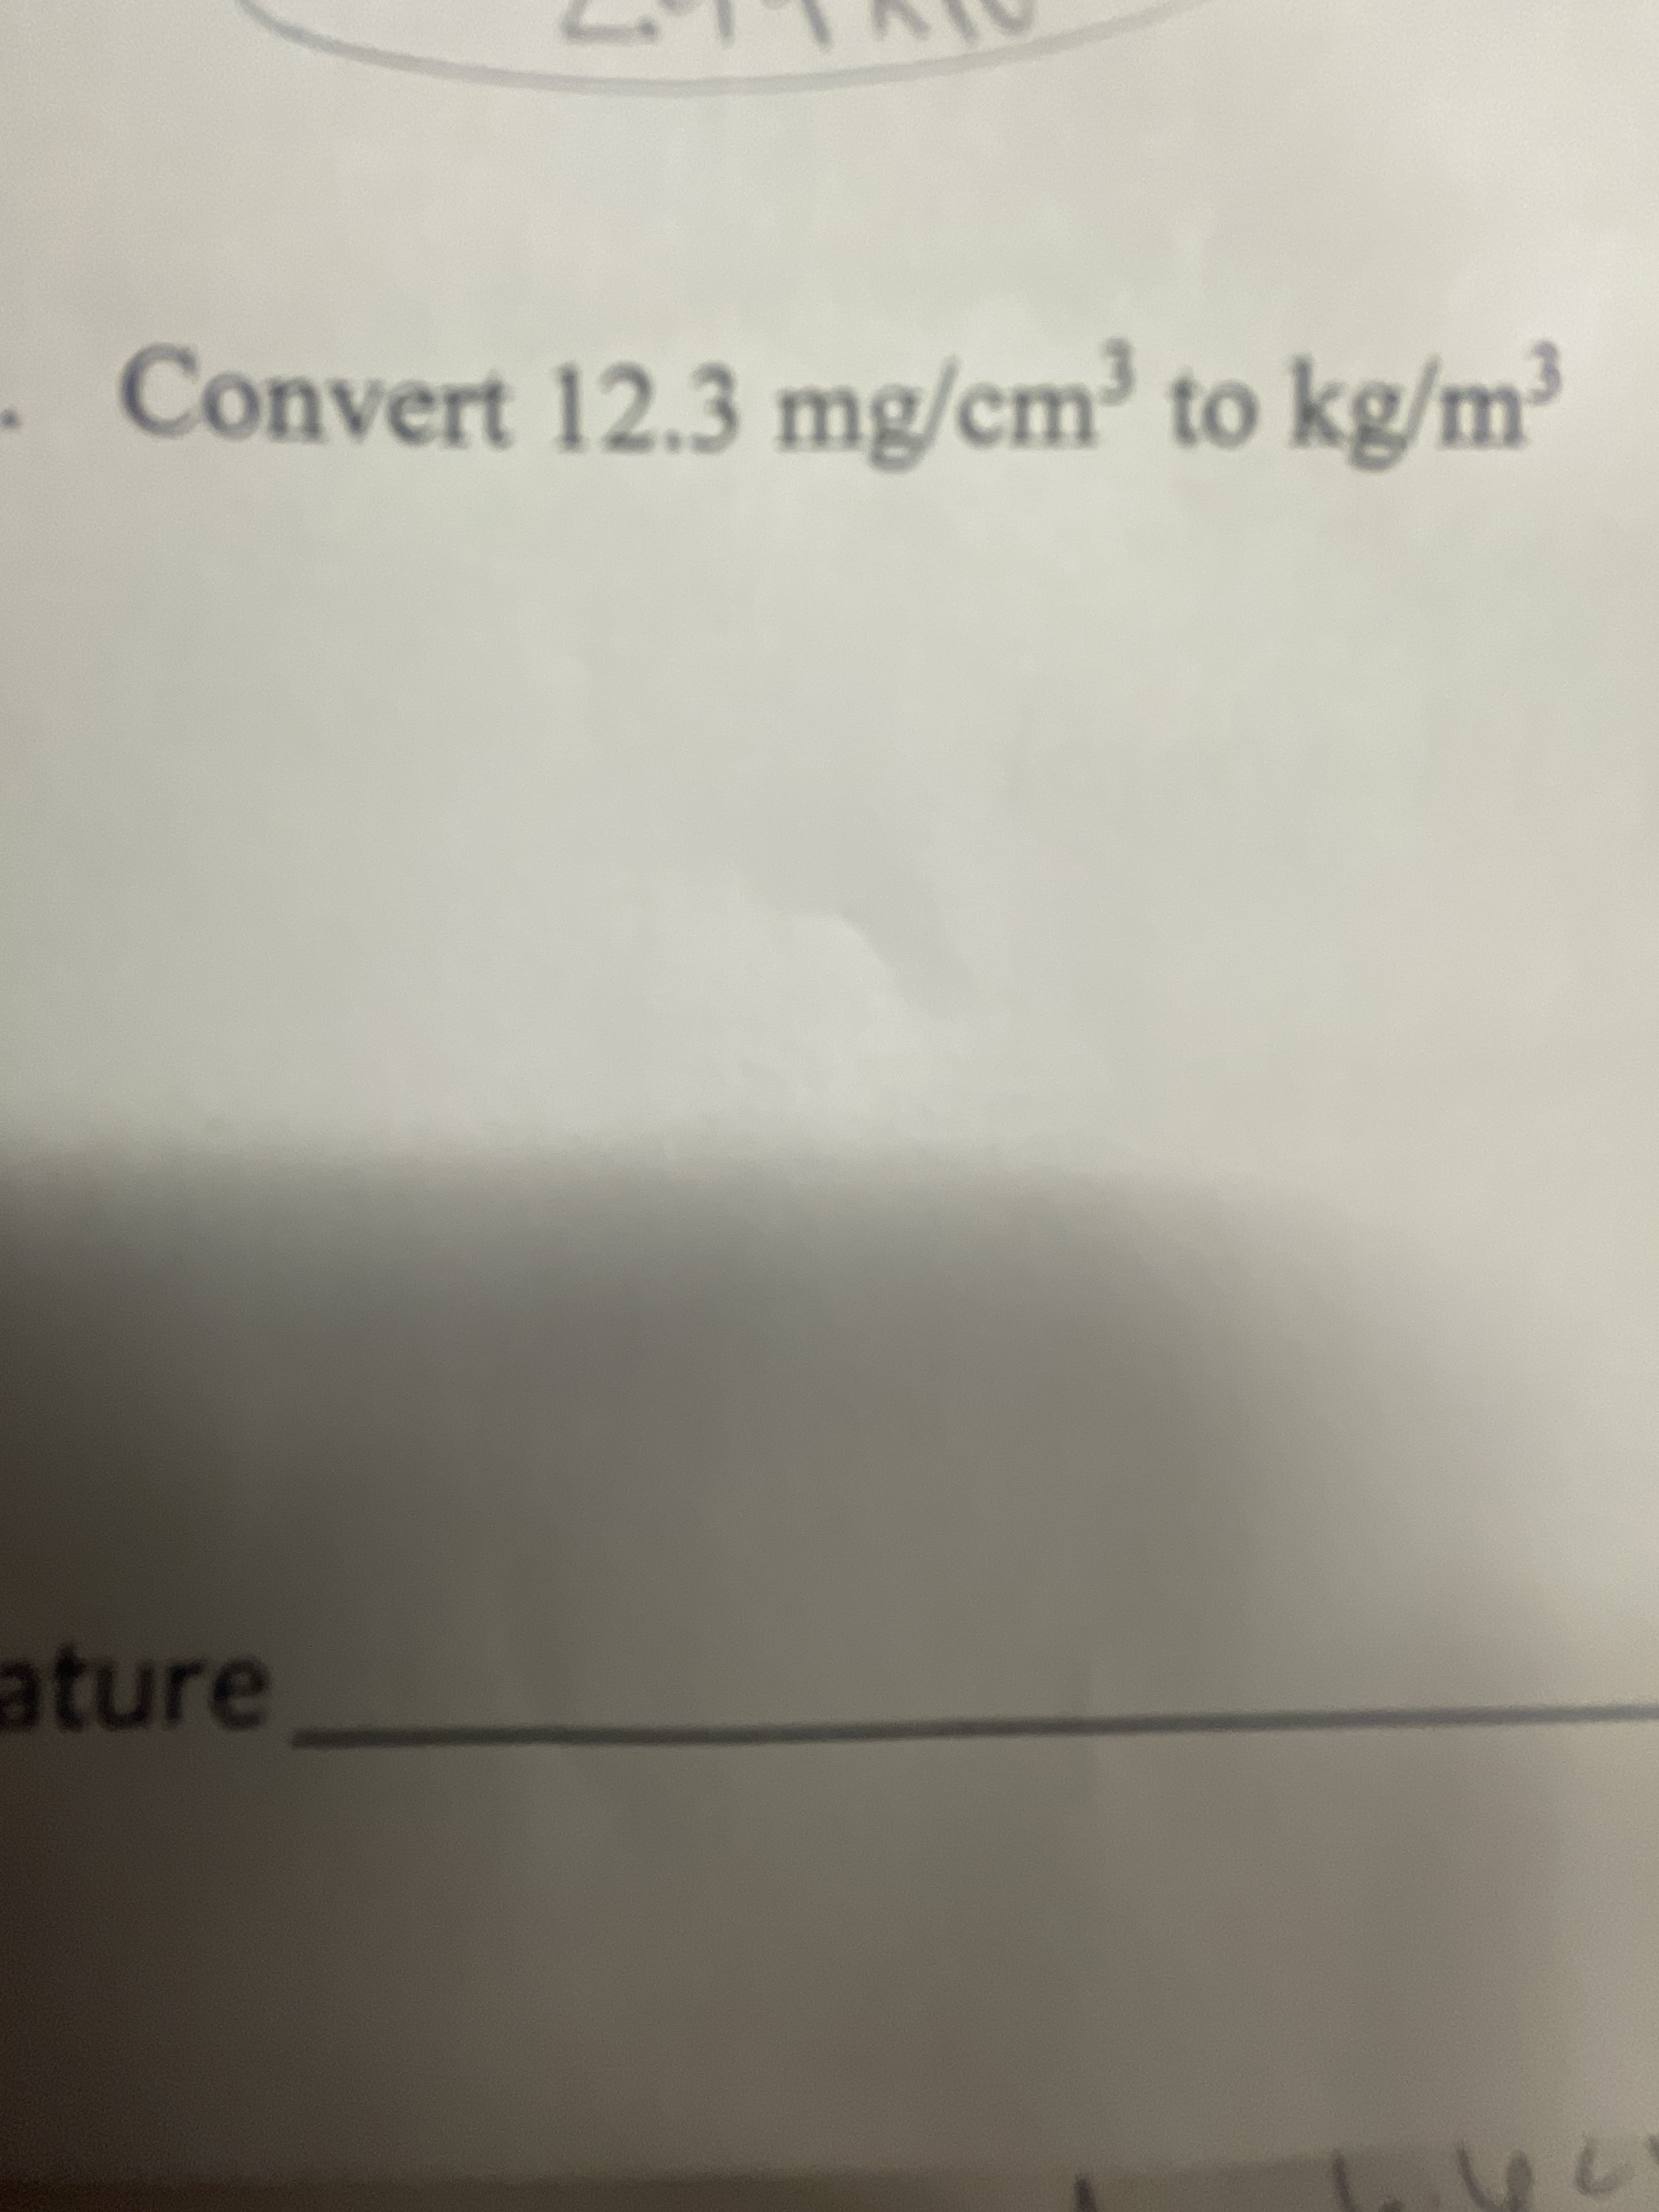 . Convert 12.3 mg/cm³ to kg/m³
